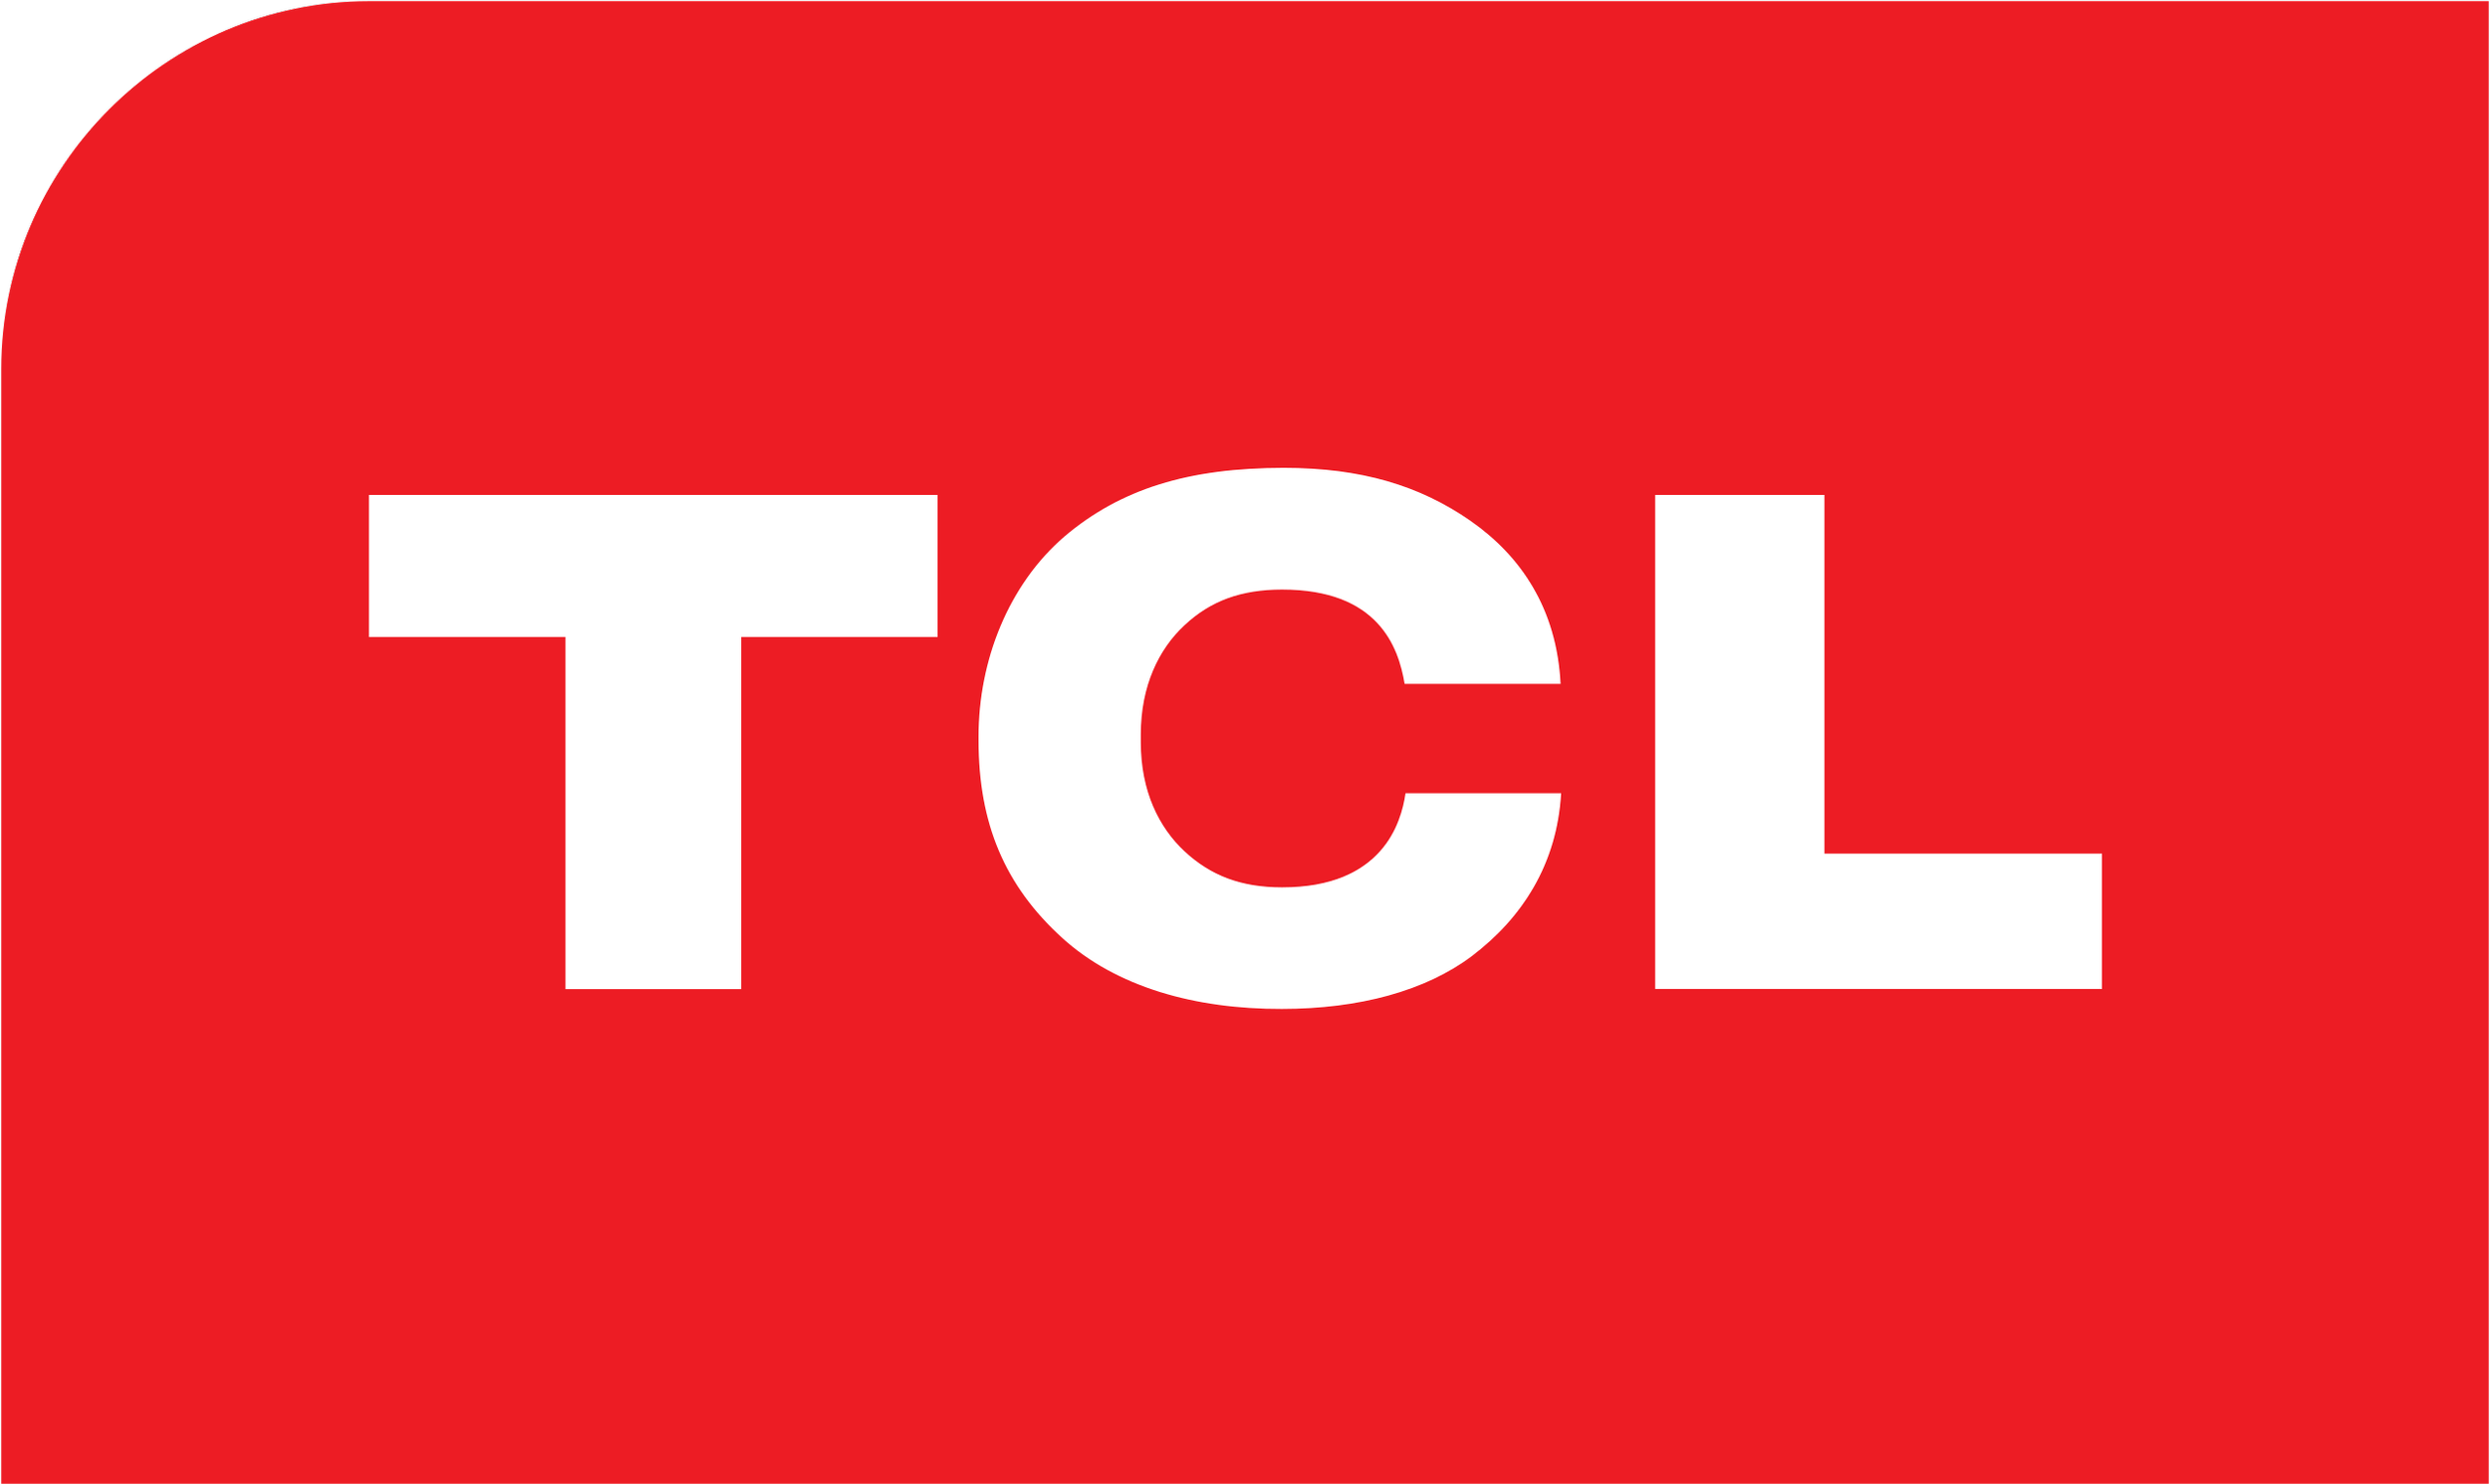 tcl logo.png